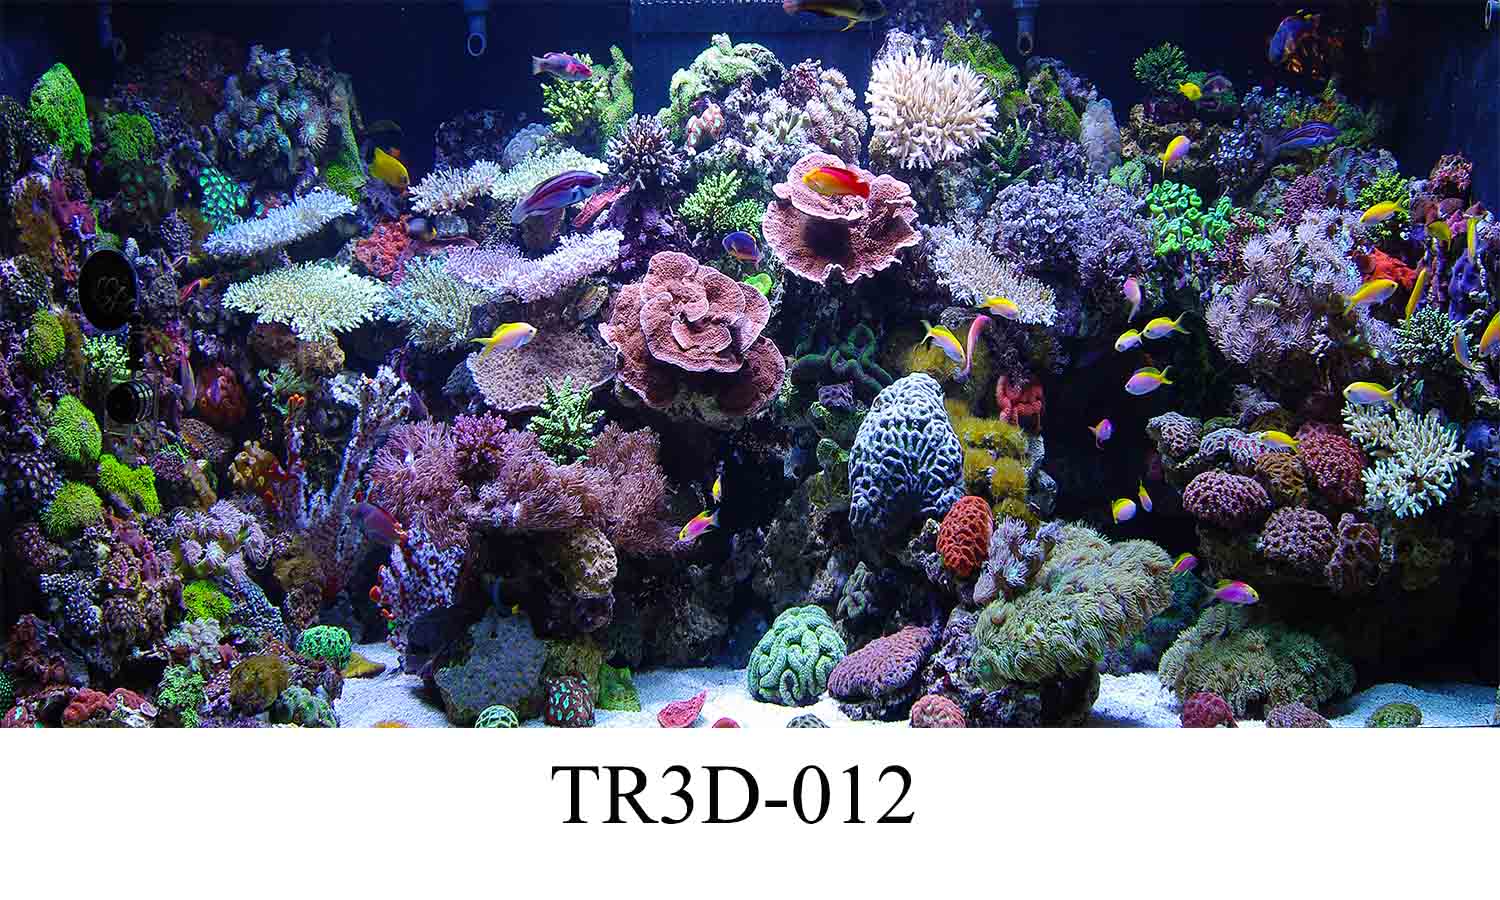 012 - Tranh hồ cá TR3D-012